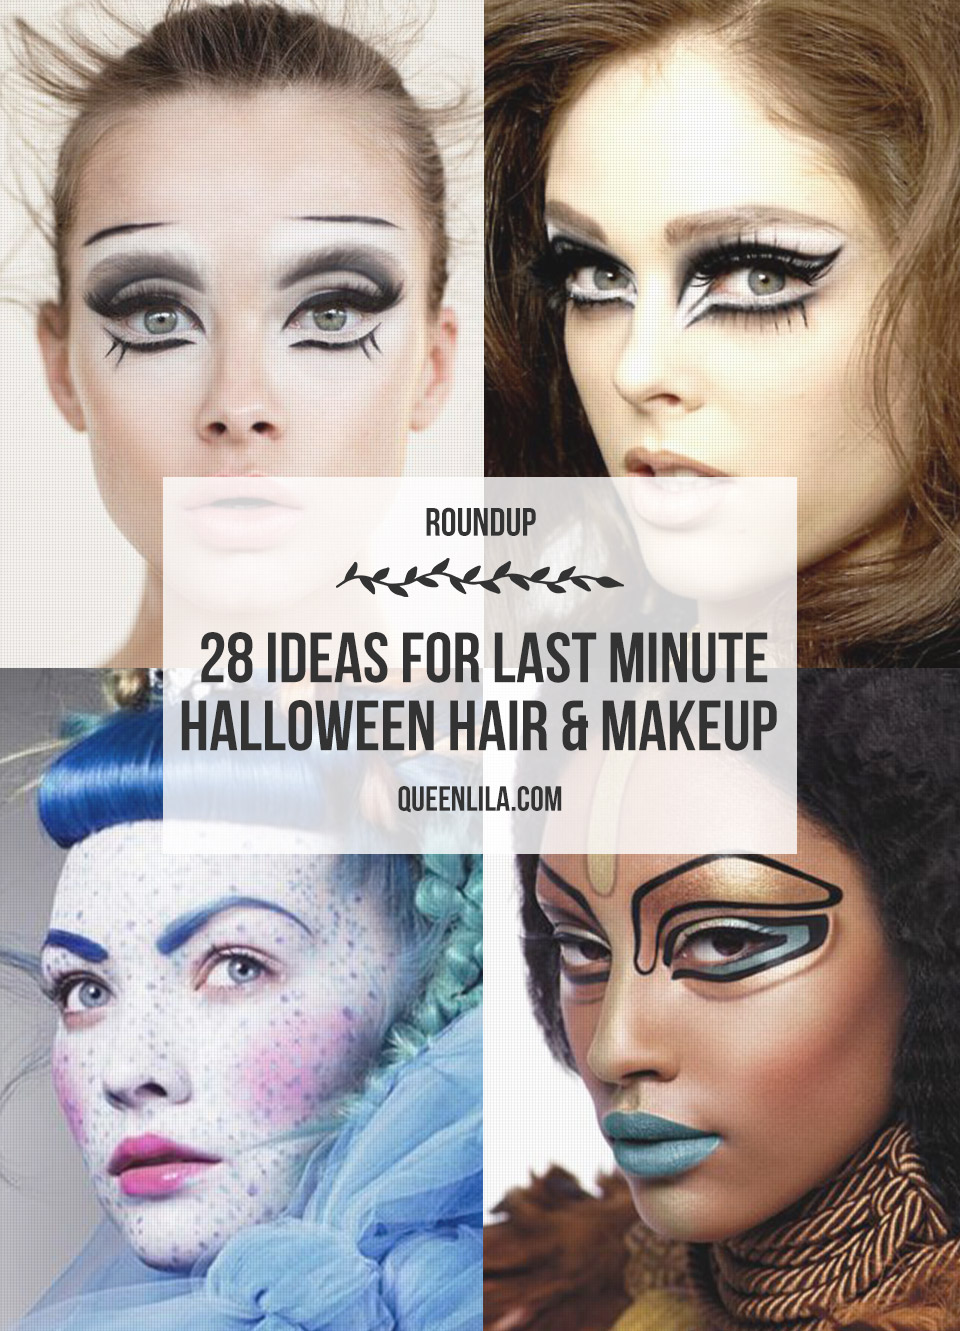 28 ideas for last minute Halloween hair & makeup | Roundup | Queen Lila